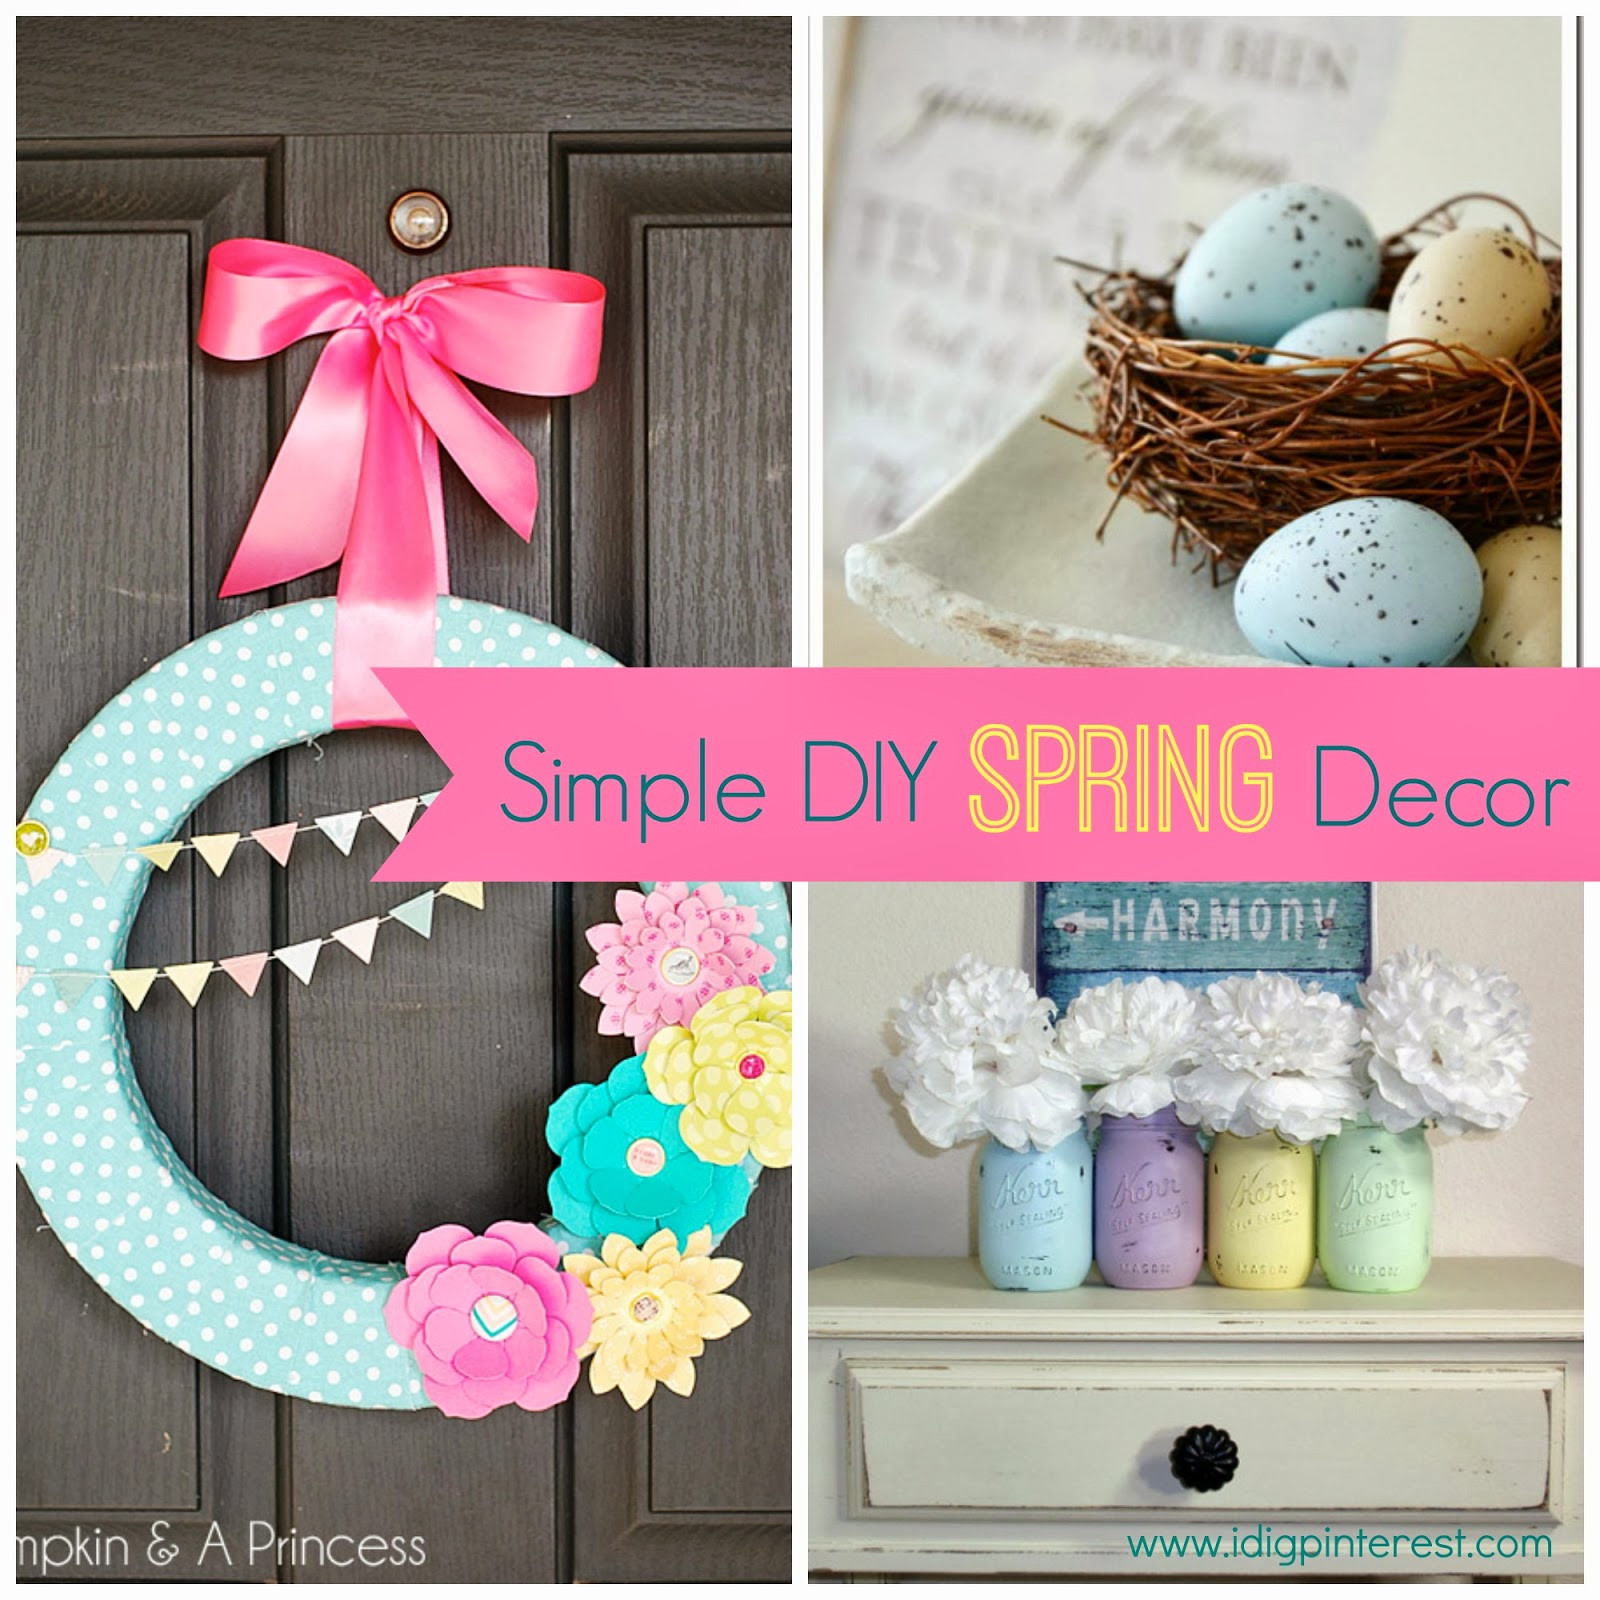 DIY Home Decor Pinterest
 Simple DIY Spring Decor Ideas I Dig Pinterest